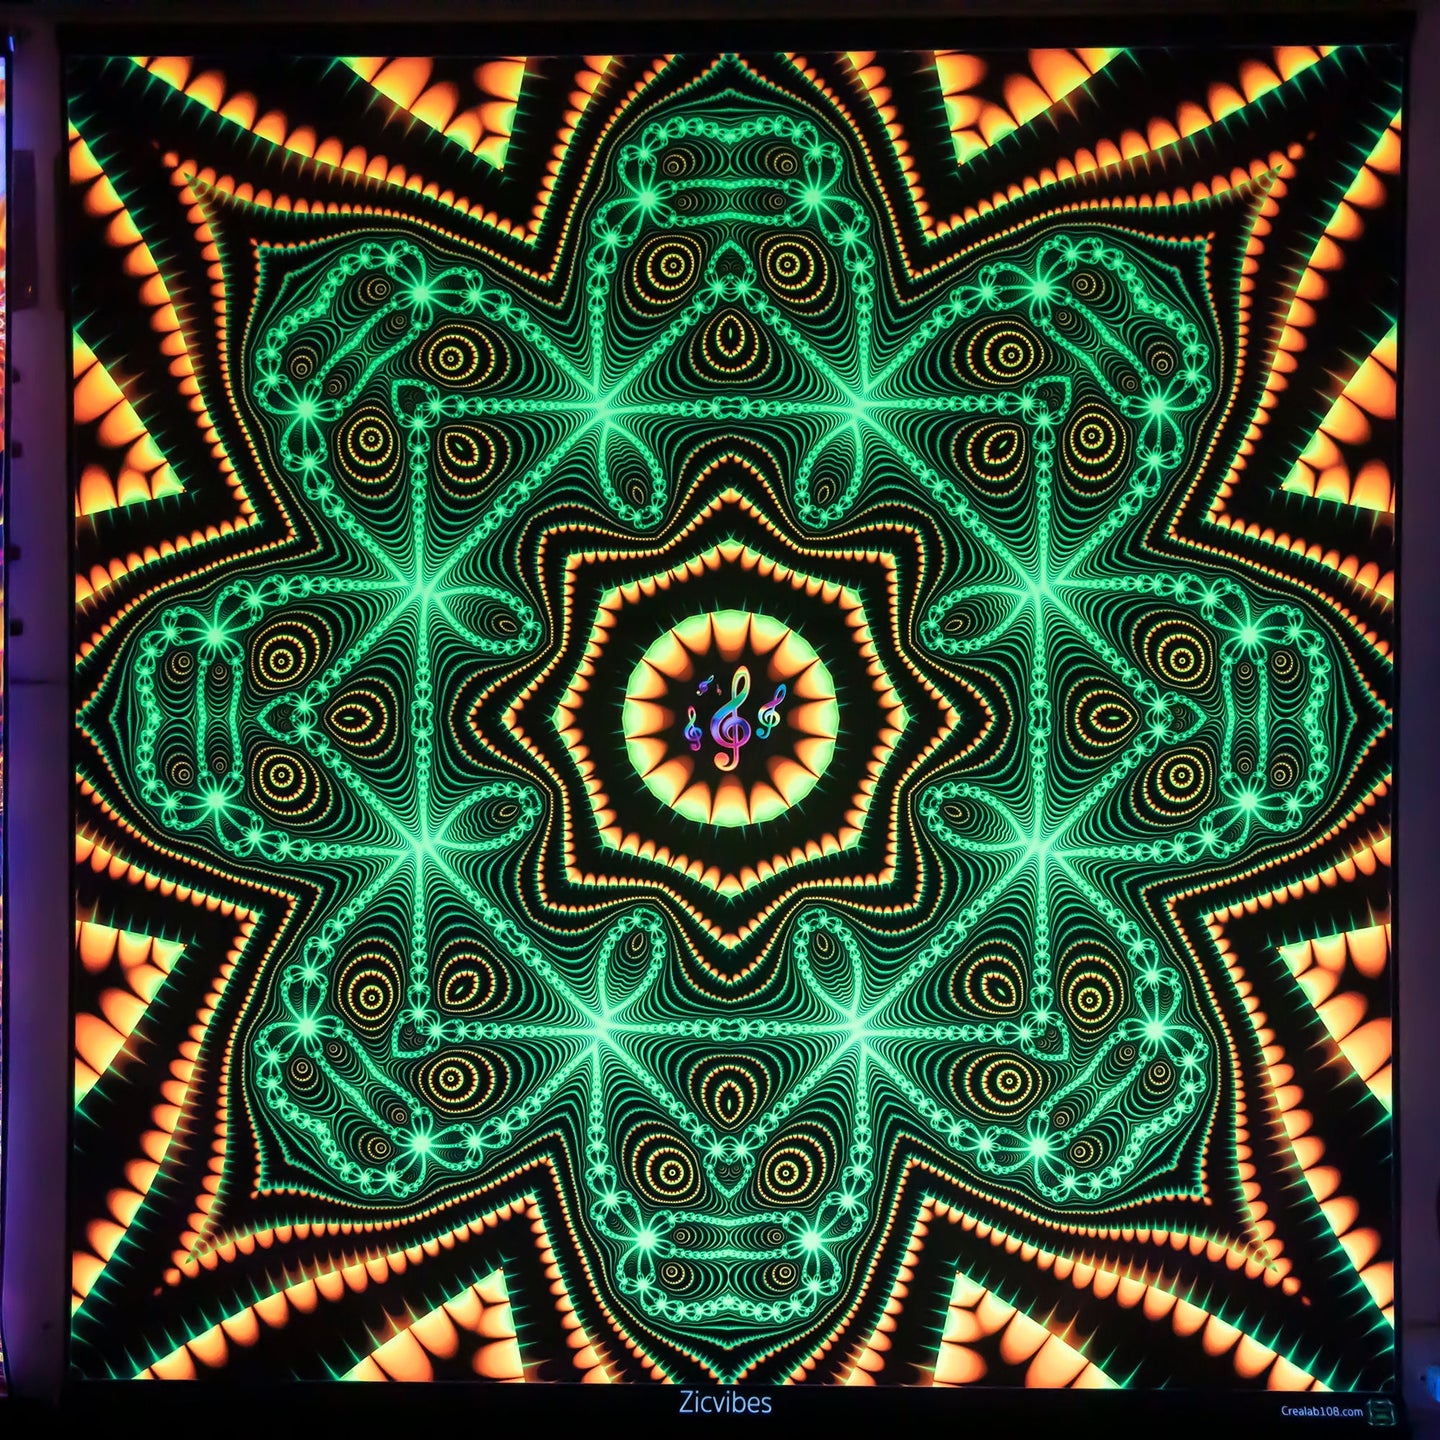 Zicvibes Trippy UV Psychedelic Fractal Mandala Tapestry - Crealab108